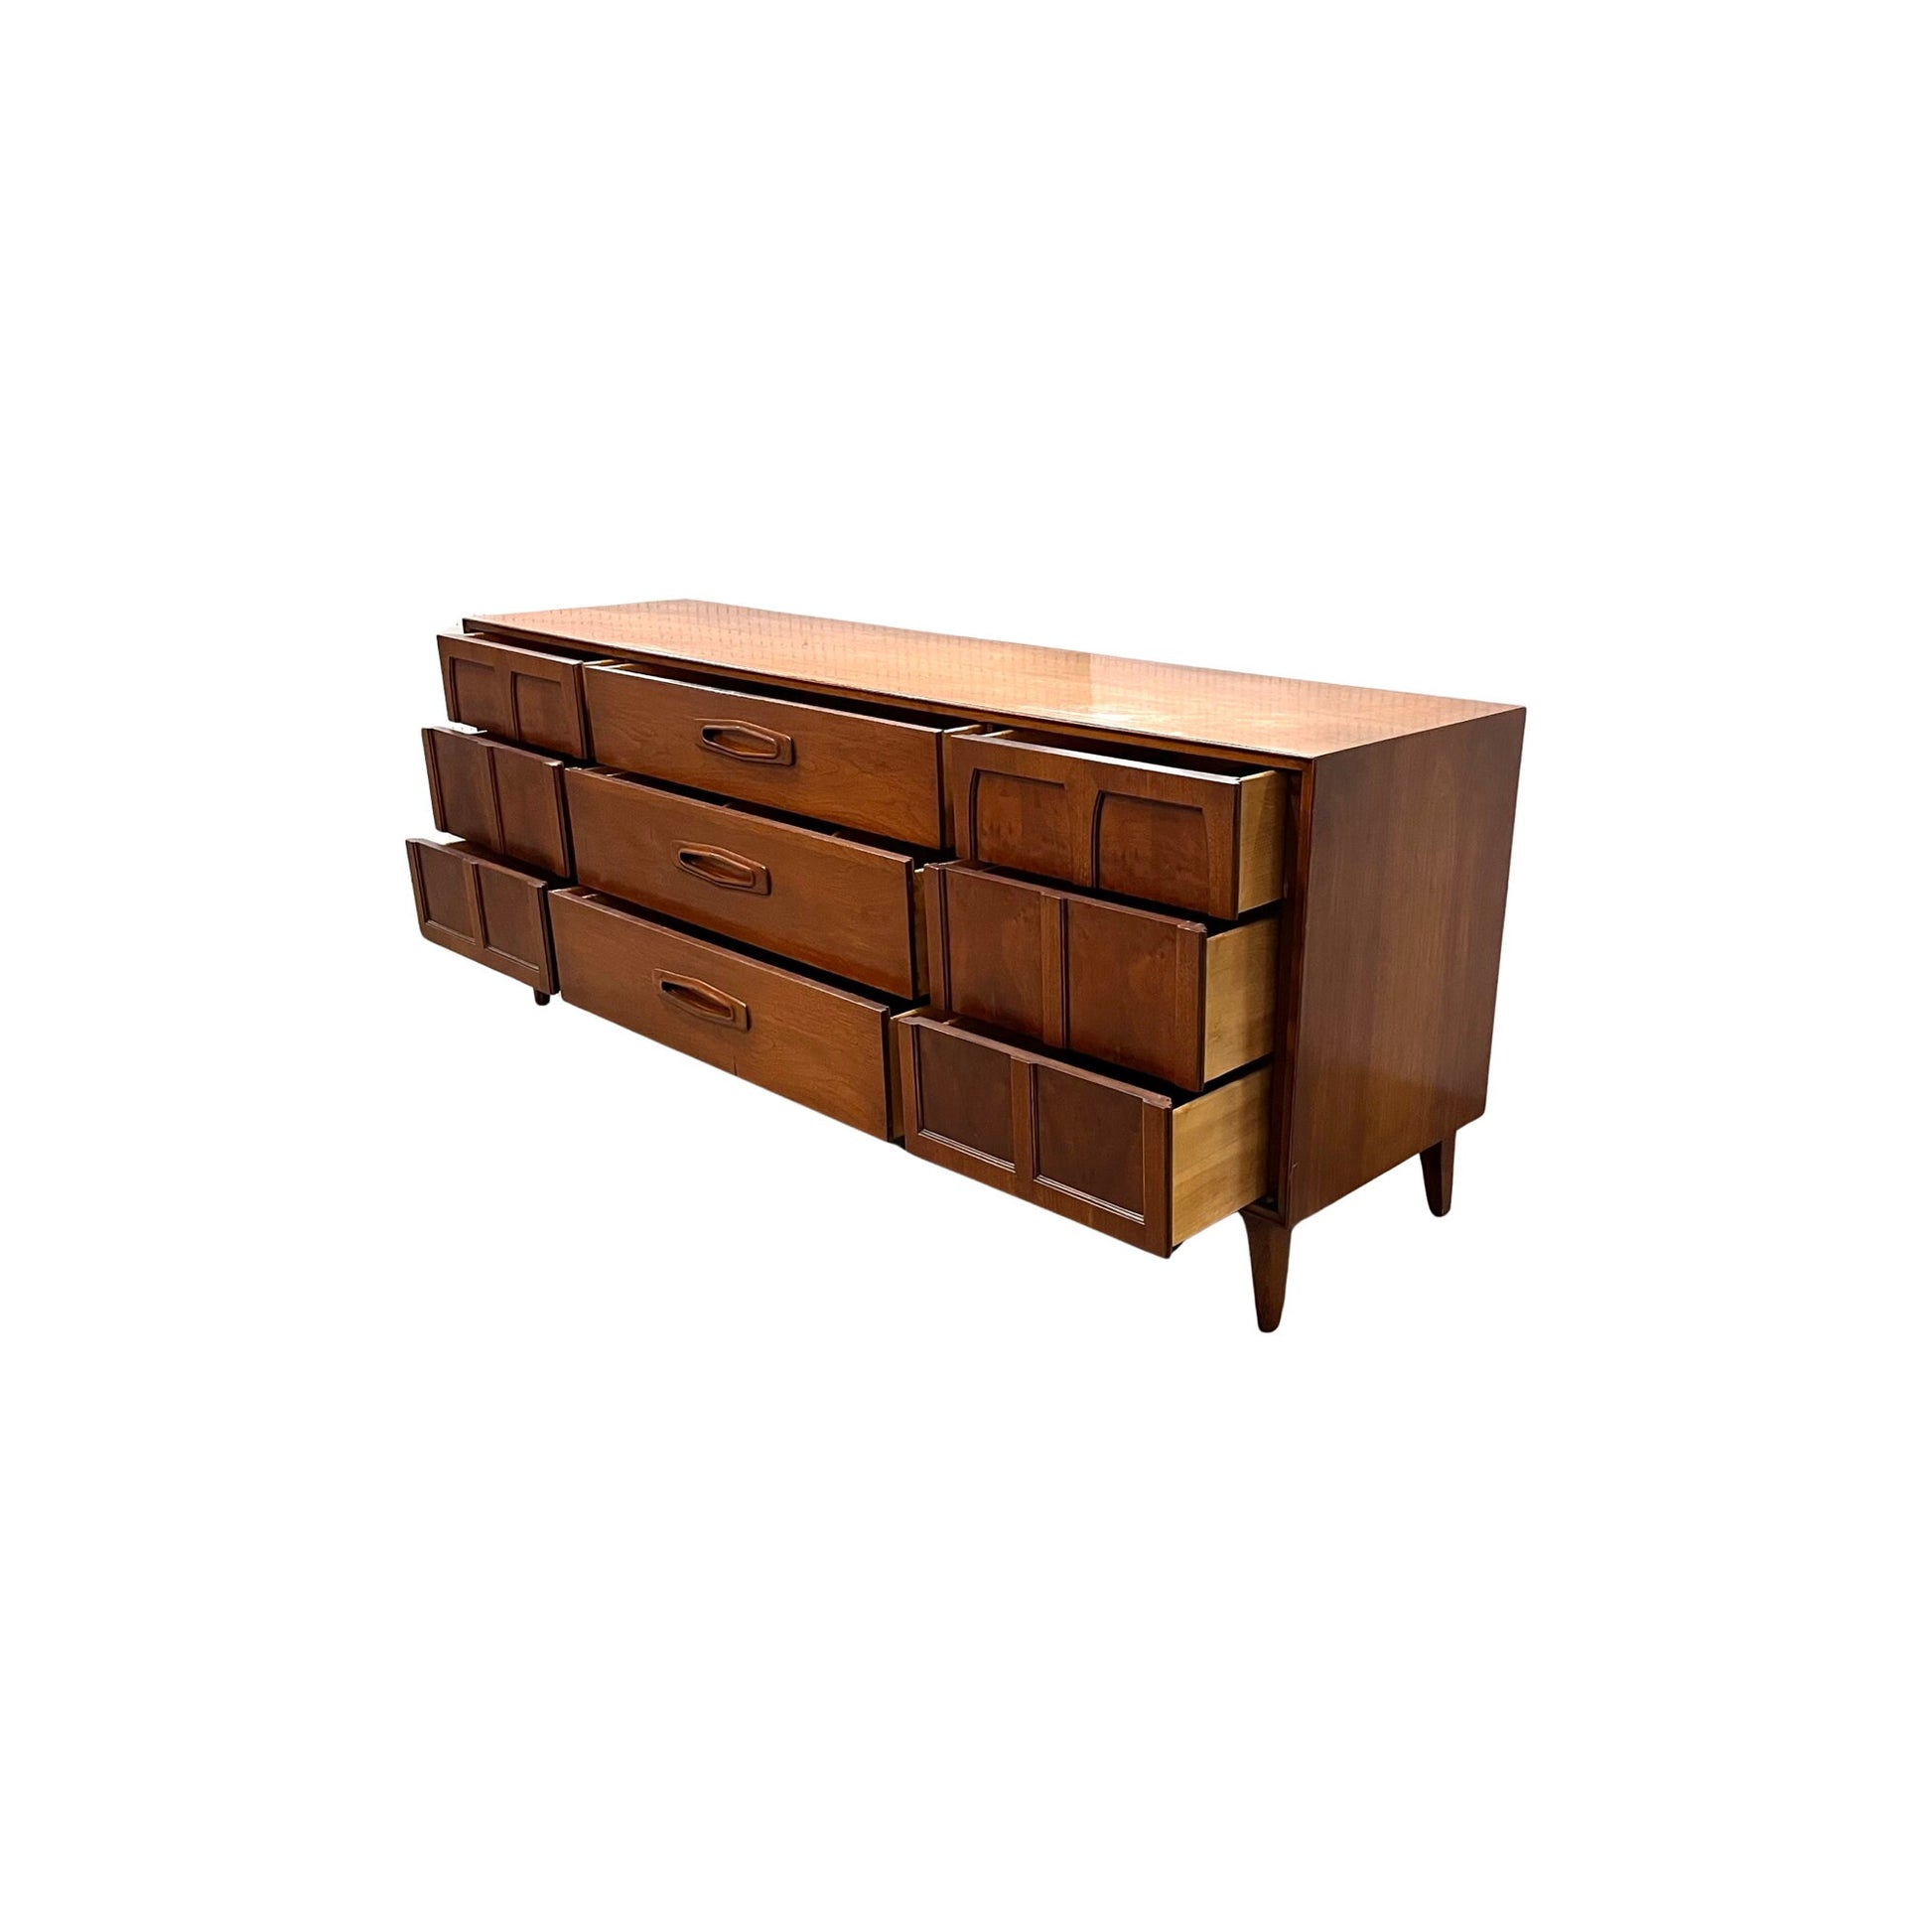 "Oval-Shaped Carved Wood Handles on Middle Drawers - Red Lion Mid Century Modern Vintage Bedroom Furniture